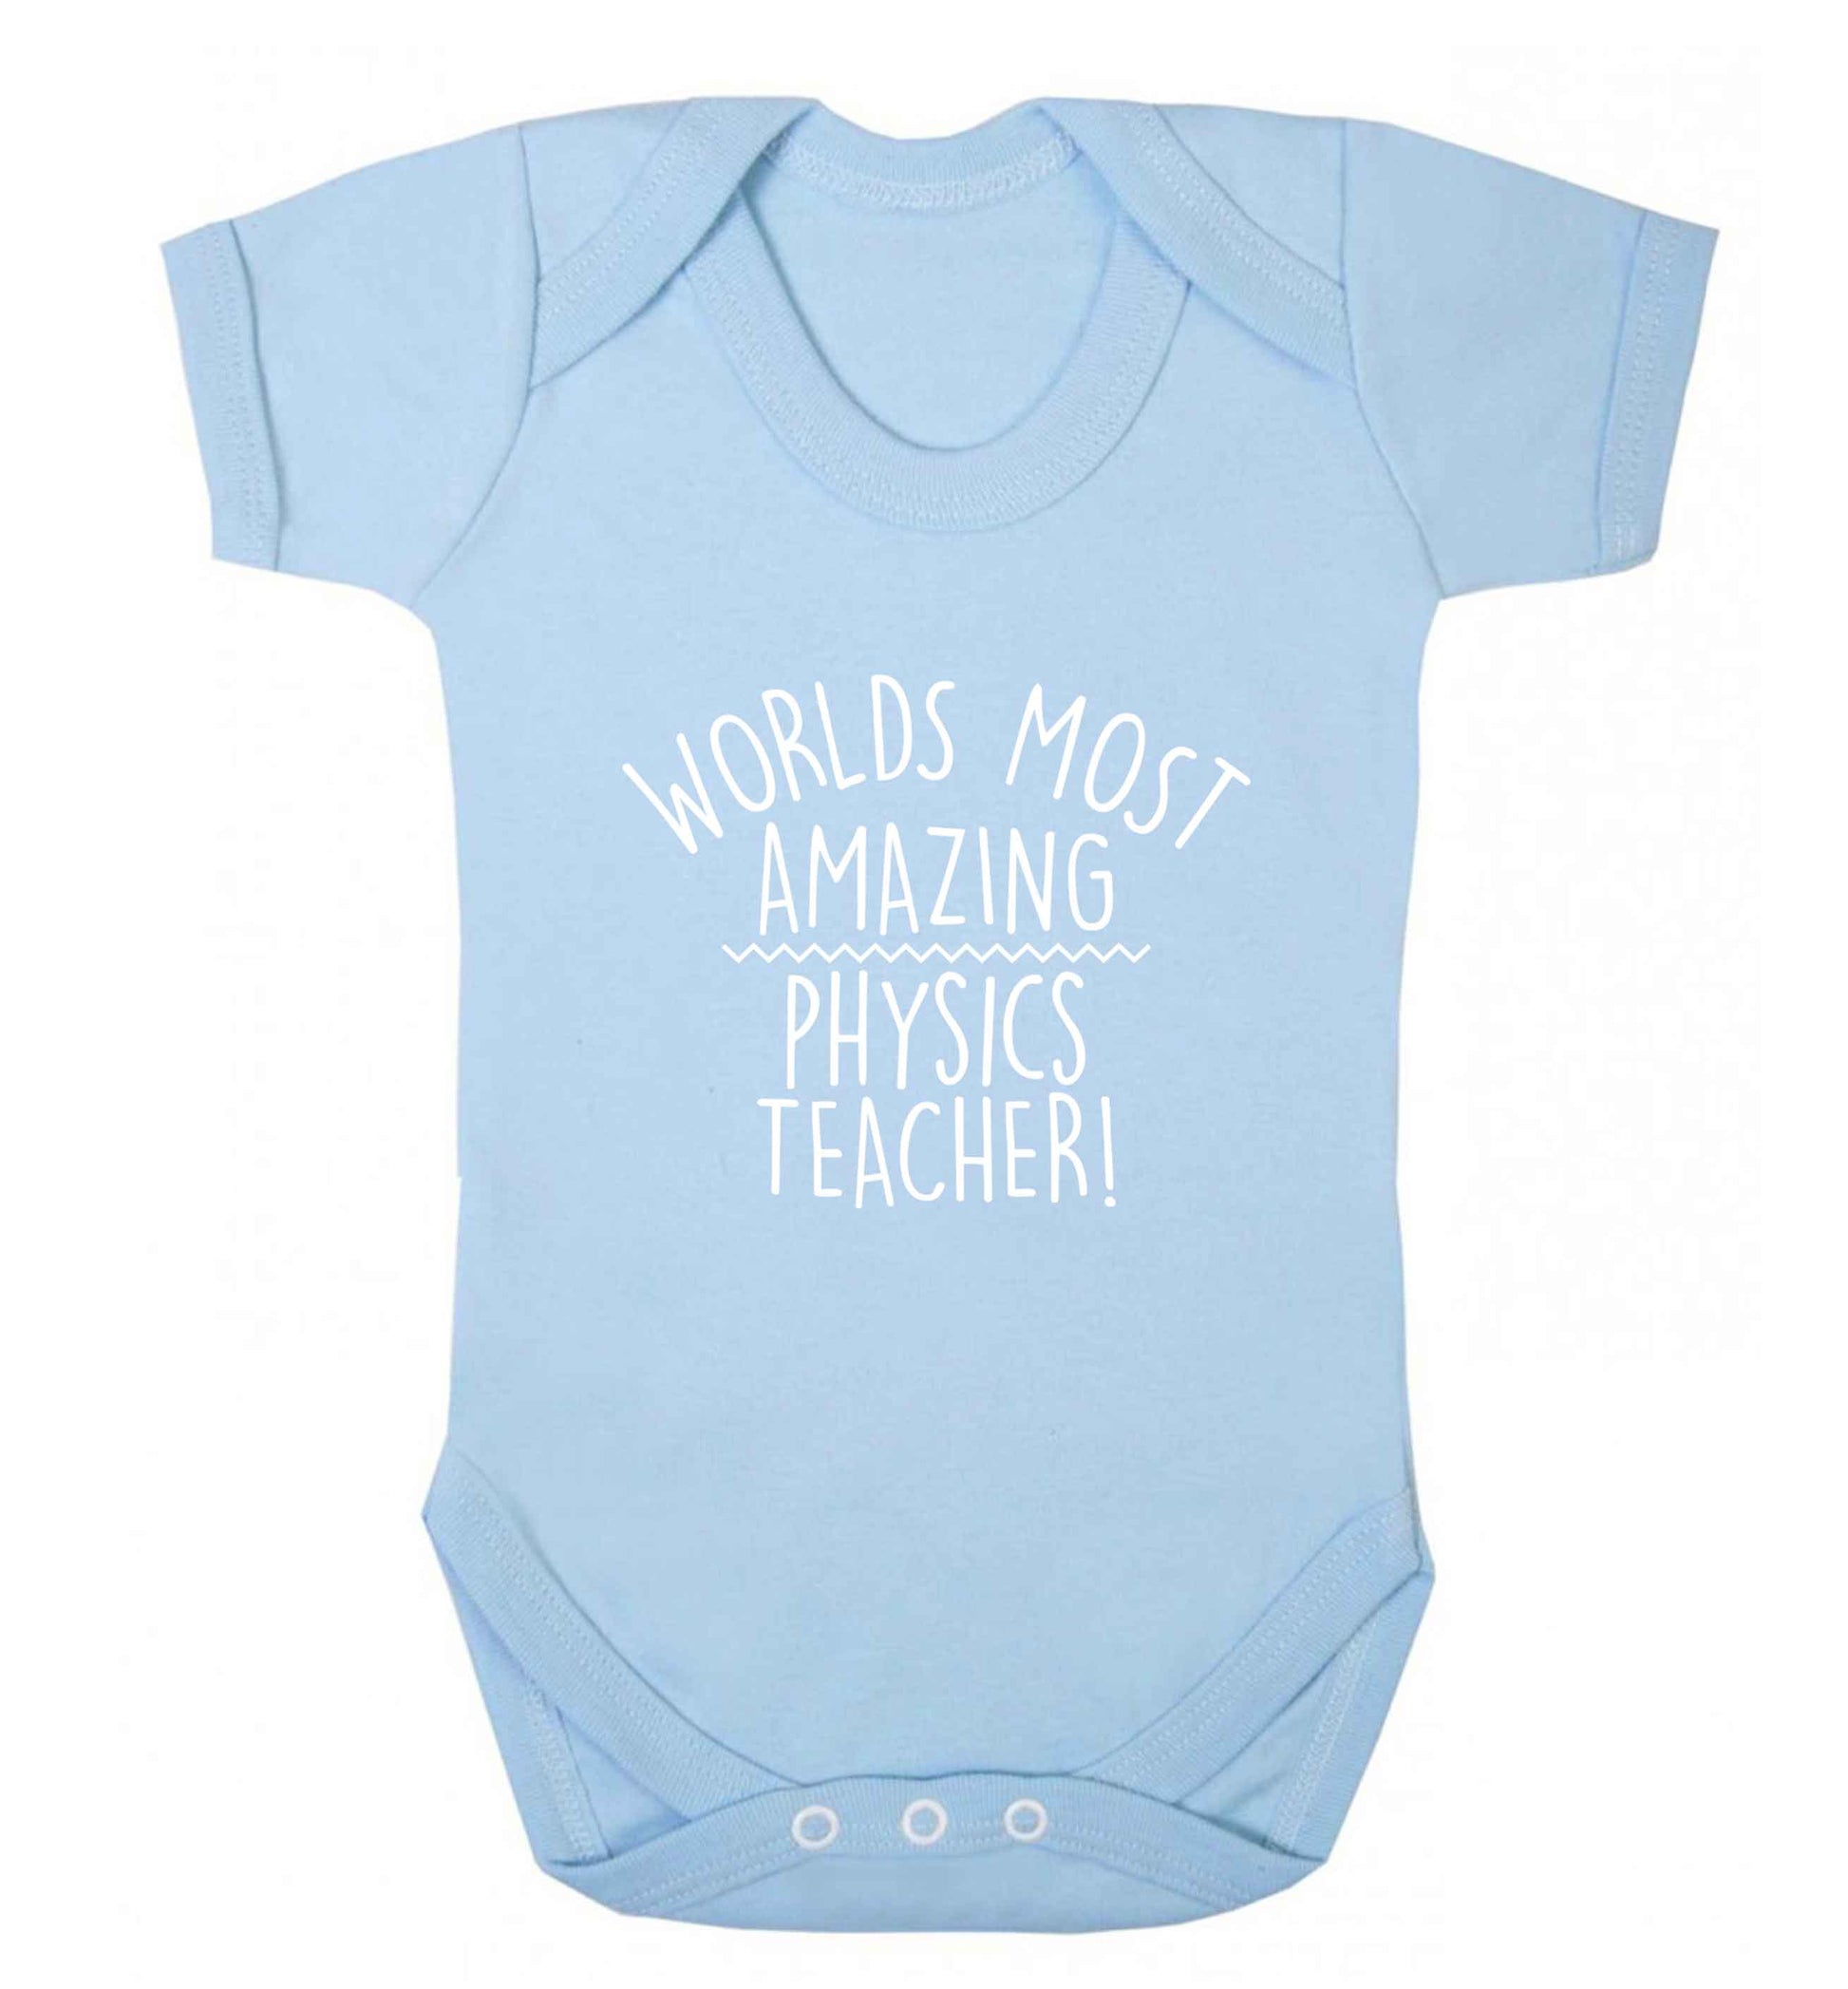 Worlds most amazing physics teacher baby vest pale blue 18-24 months